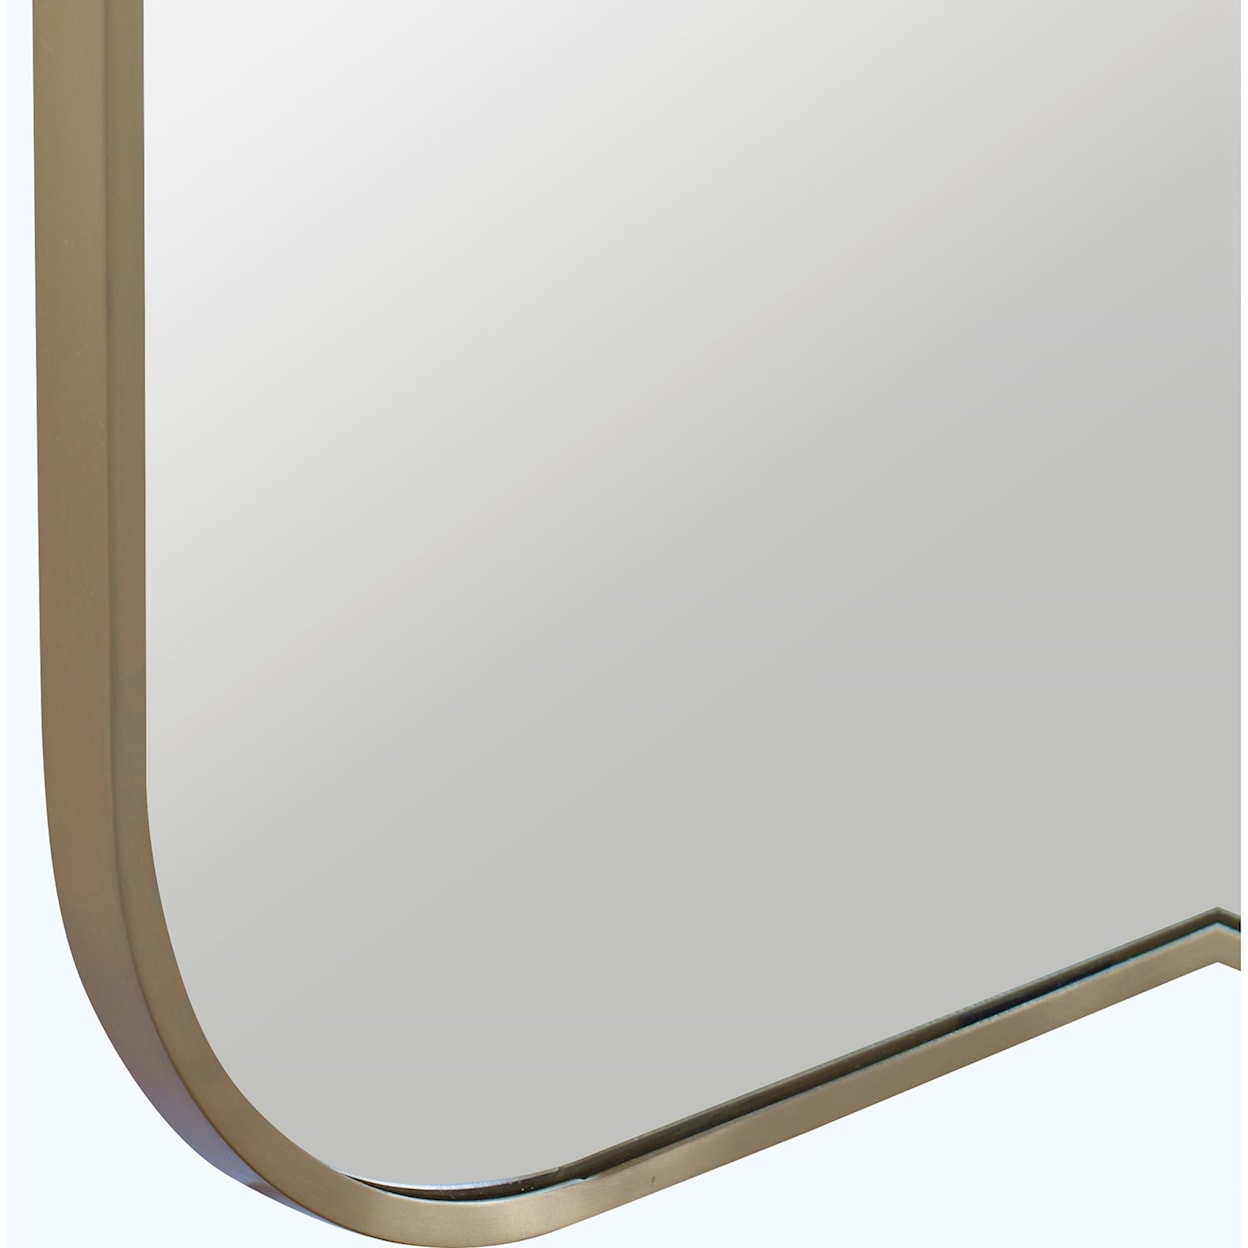 Uttermost Mirrors - Oval Taft Plated Brass Mirror